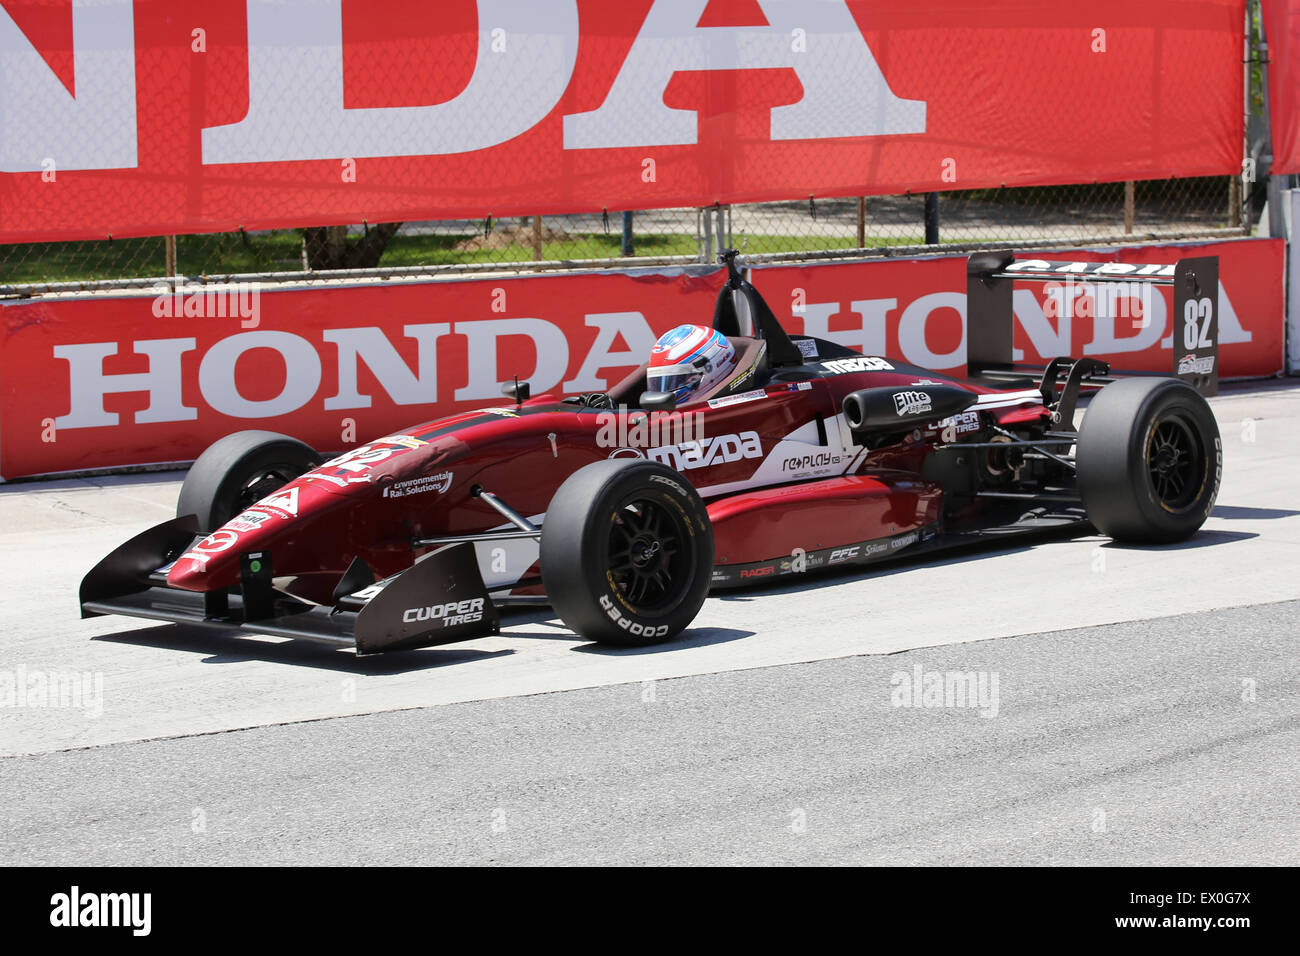 Toronto-Honda IndyCar racing Stockfoto